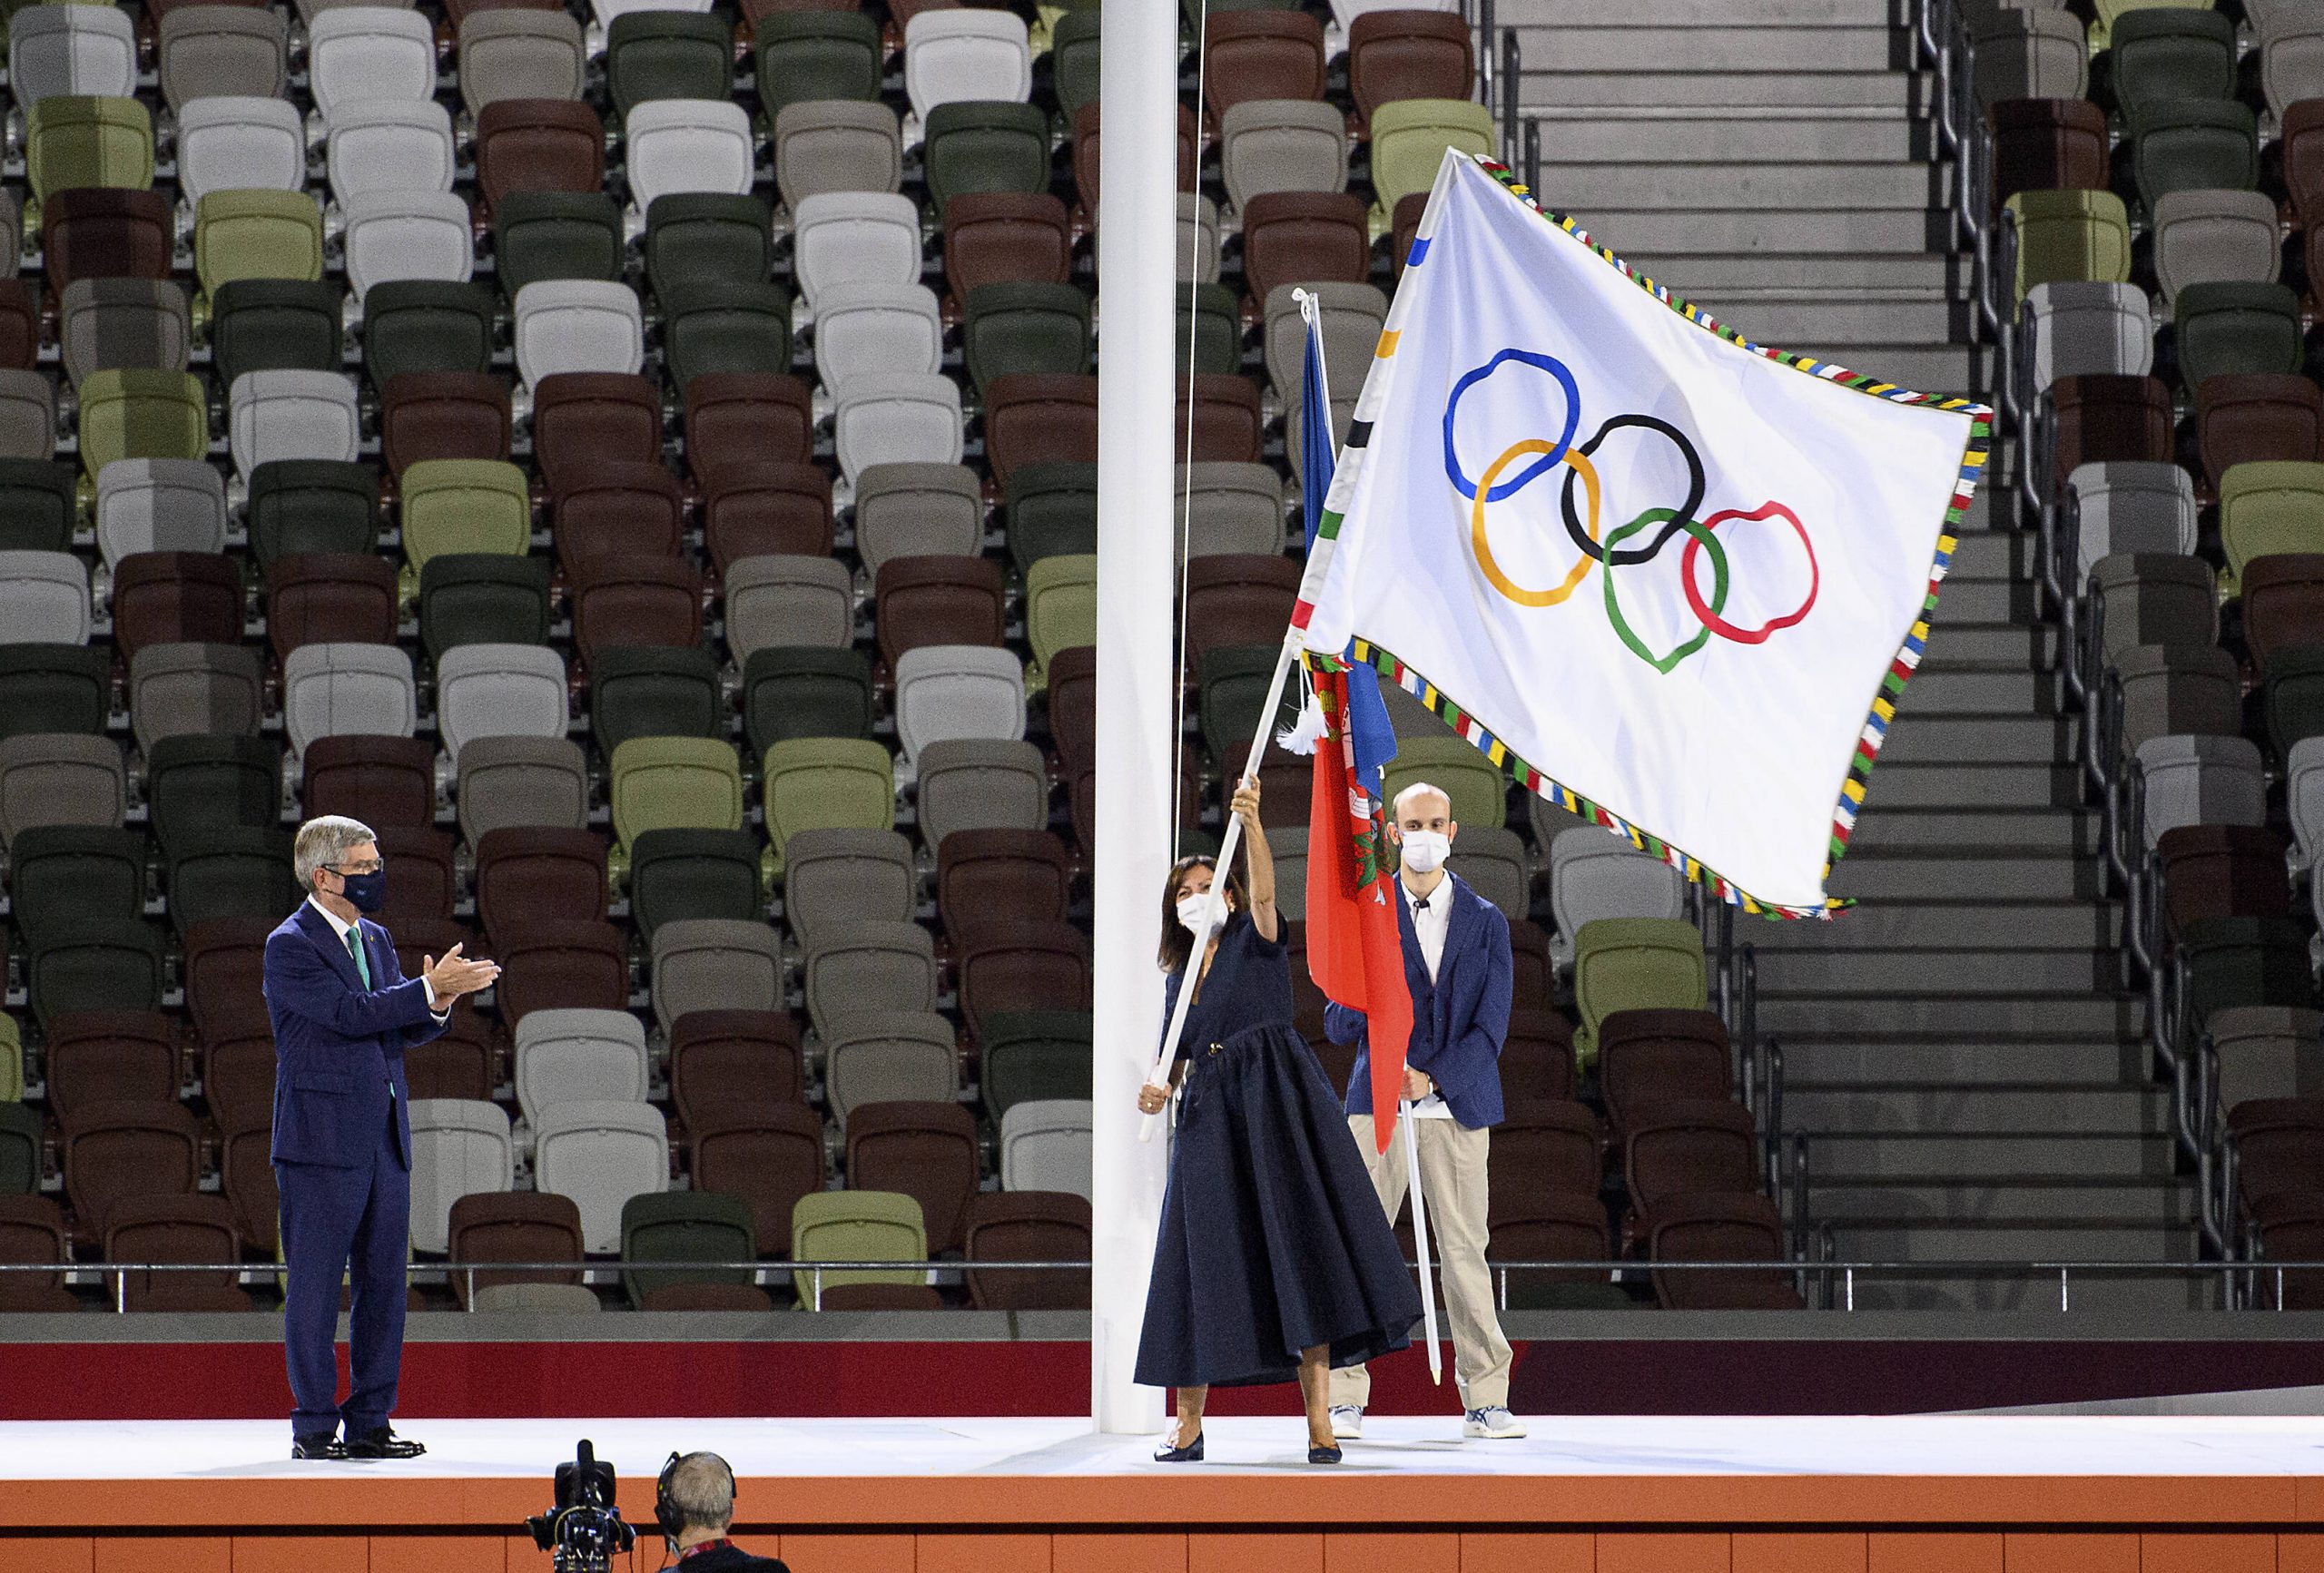 Pandēmijas olimpiāde. Ar ko mums paliks atmiņā “Tokija 2020”?